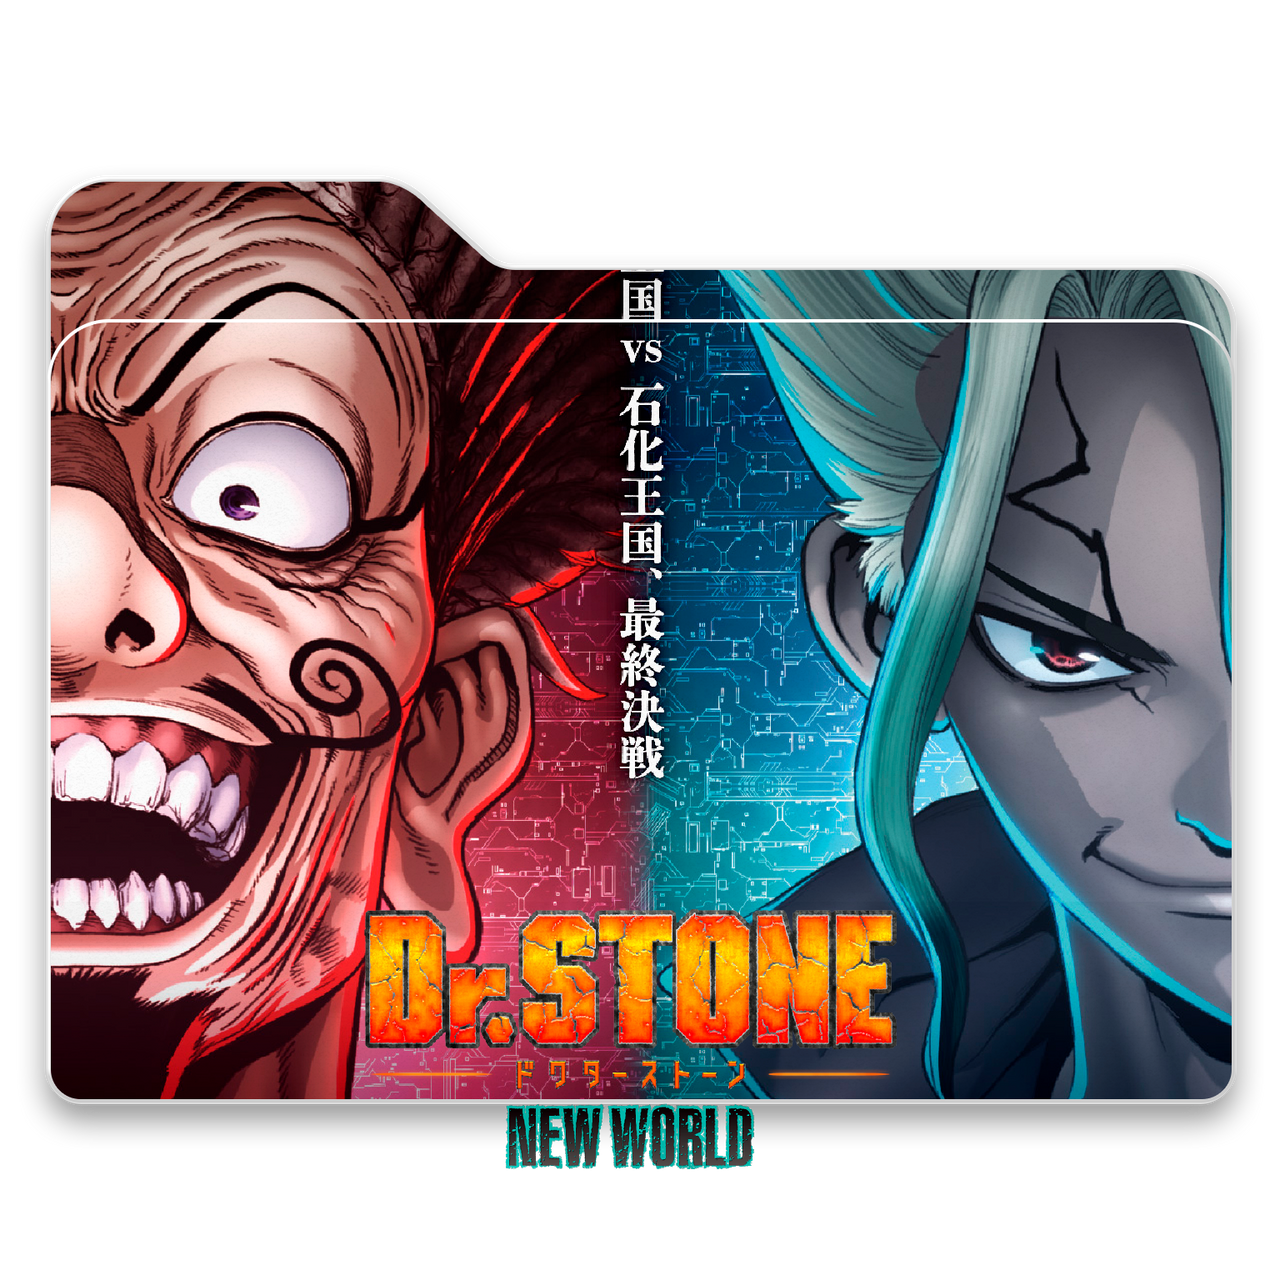 Dr.stone Season 2 folder icon by AhmedFarouk20 on DeviantArt